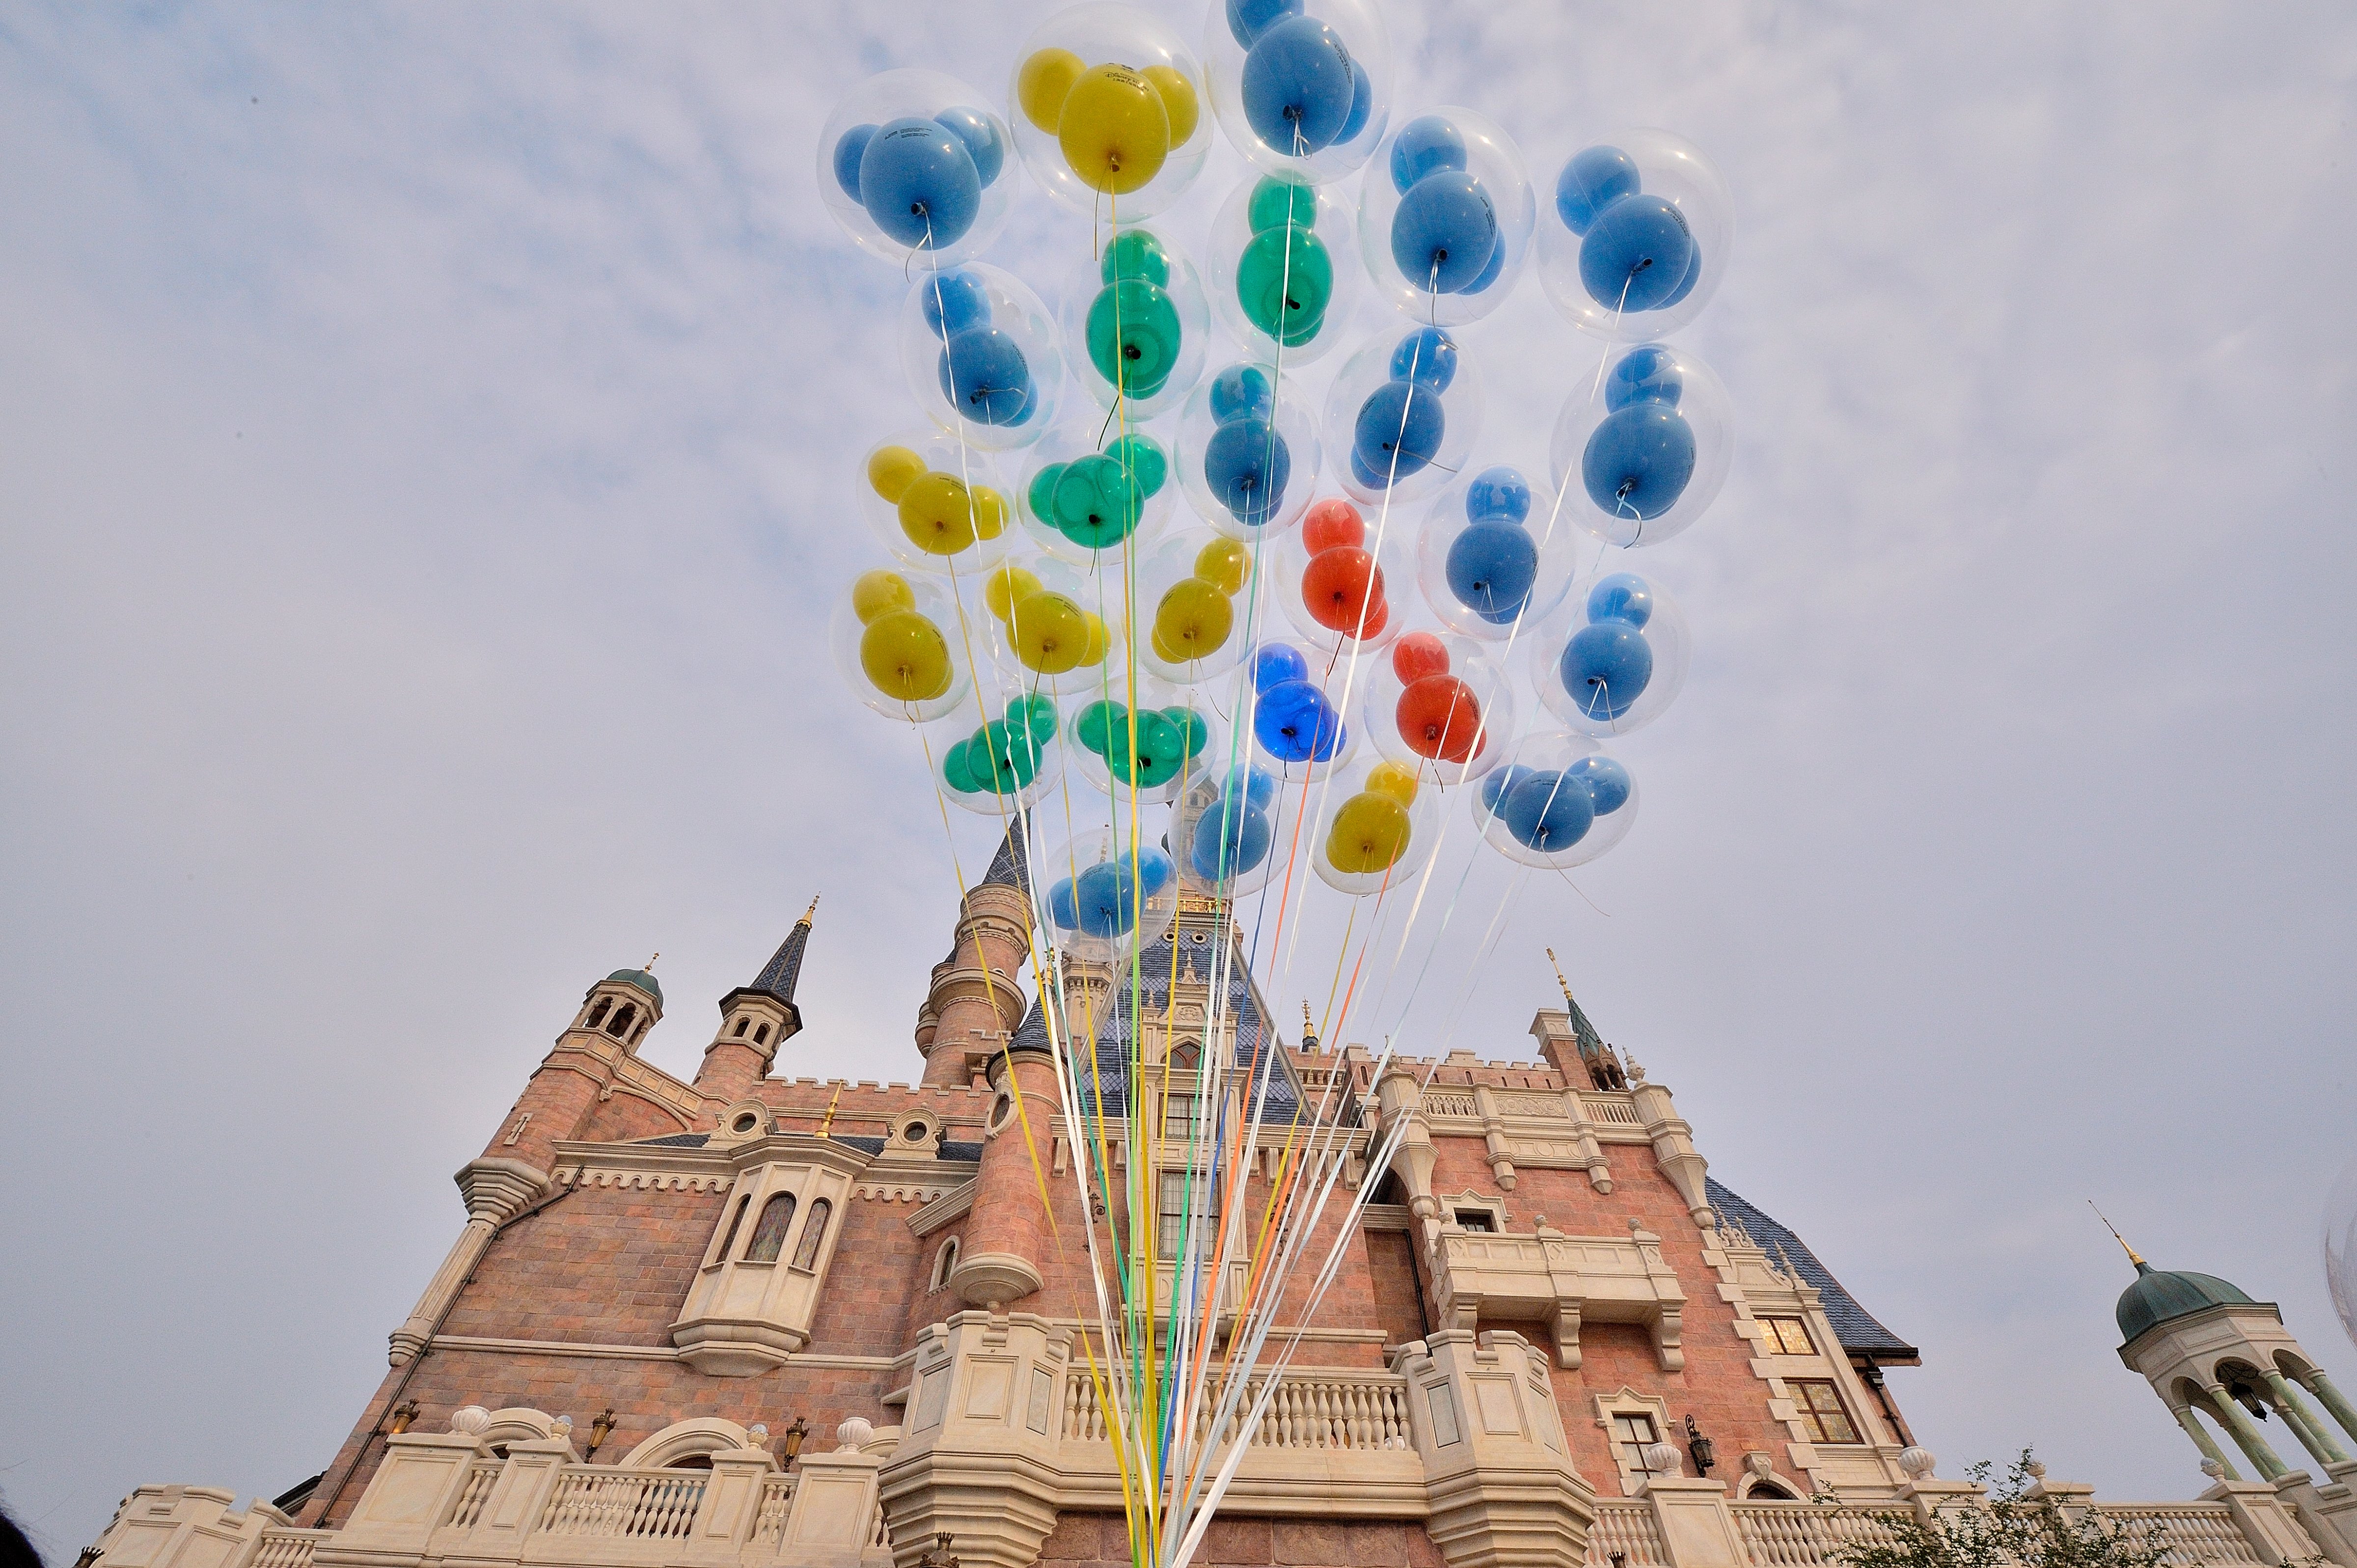 Shanghai Disneyland will open its doors Thursday. (Marcio Machado&mdash;Getty Images)